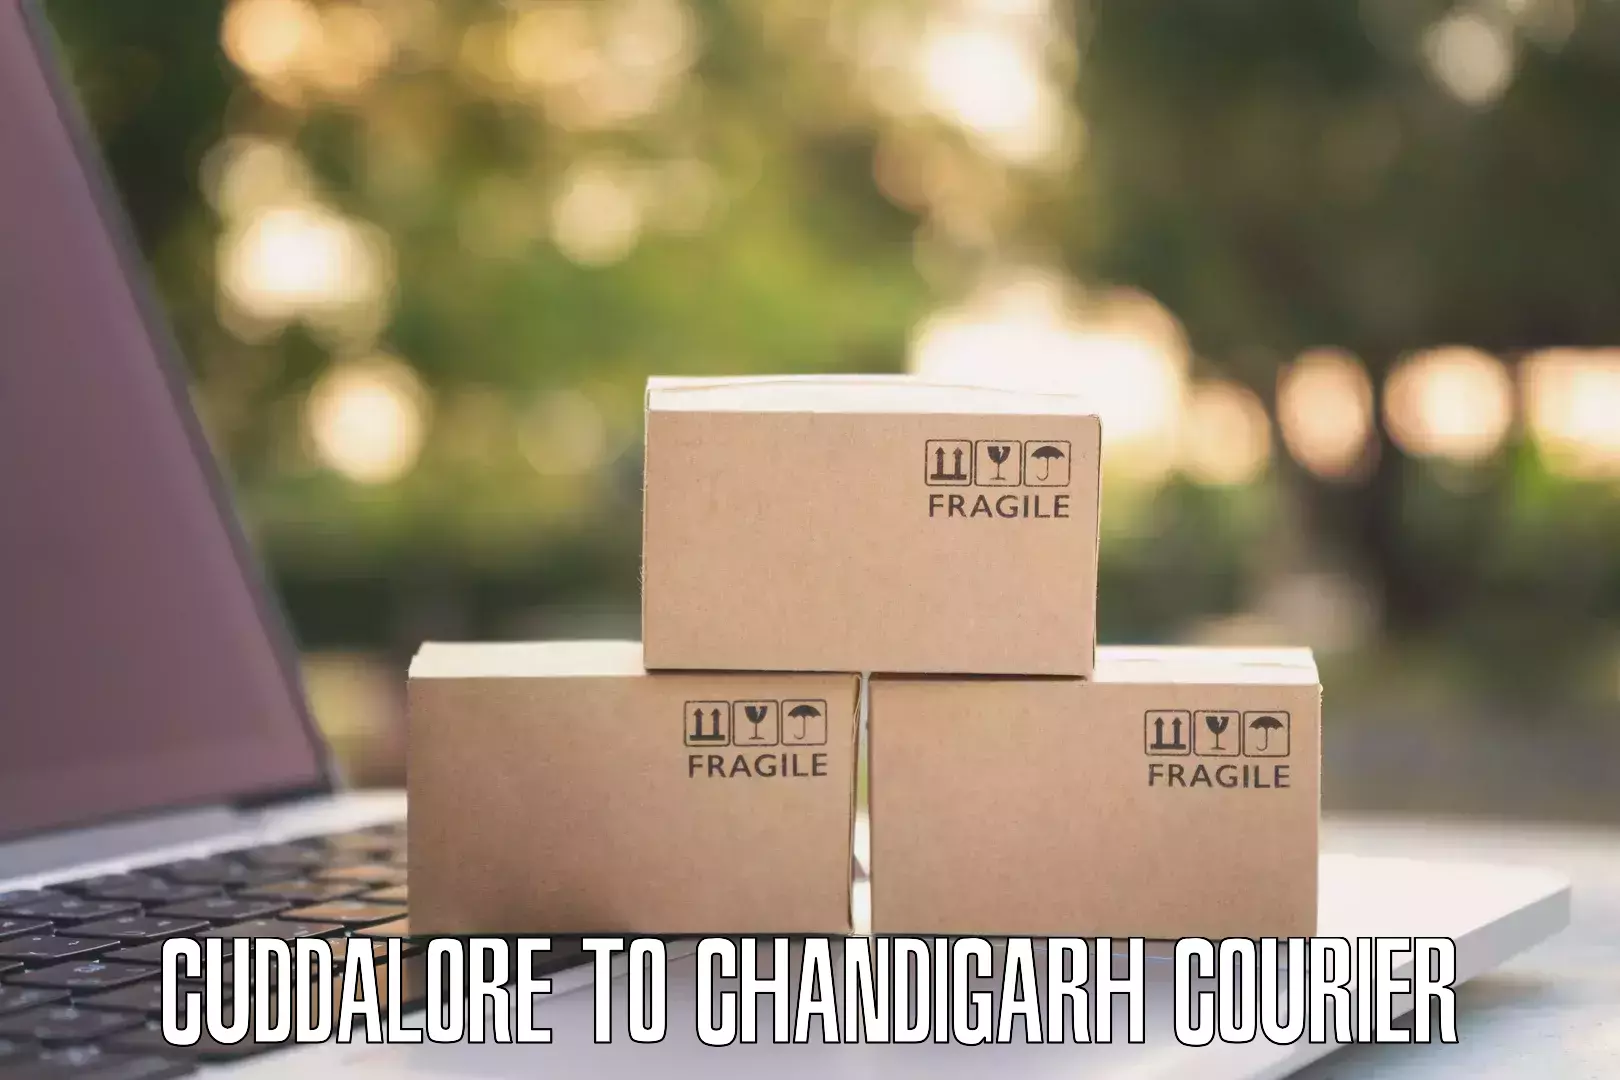 Fast delivery service Cuddalore to Chandigarh